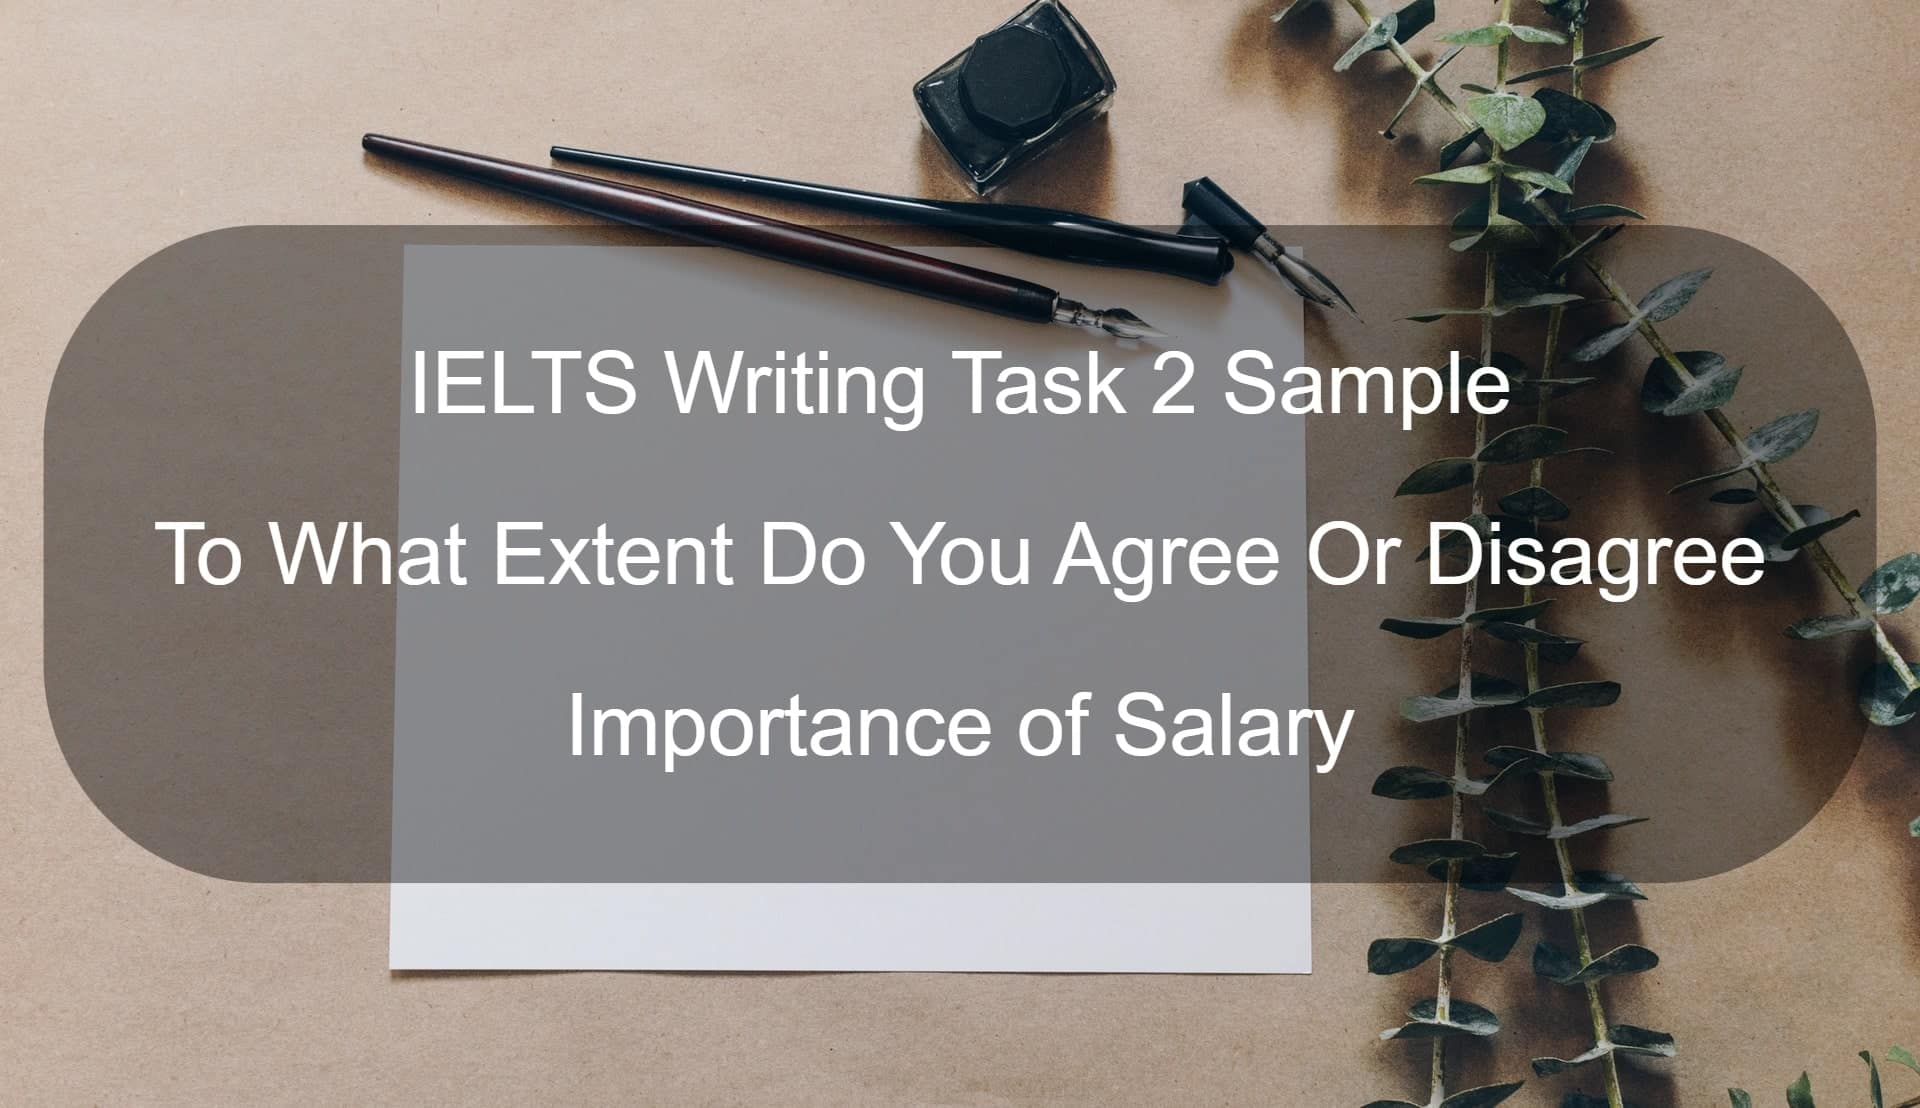 IELTS Writing task 2 sample importance of salary